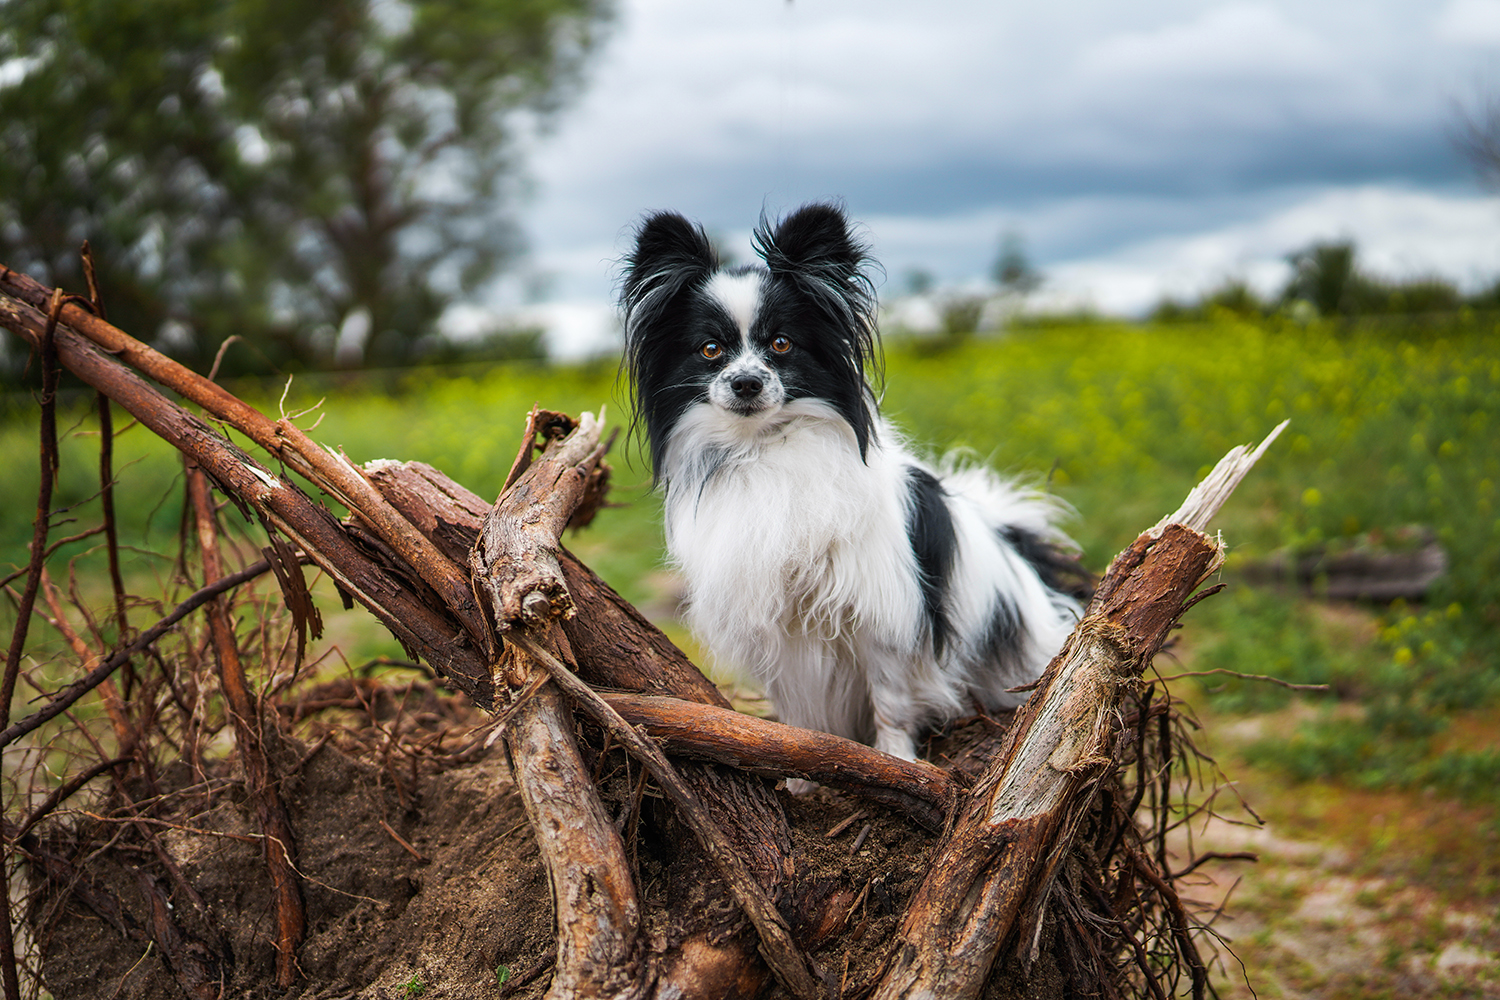 Cute dog standing on a fallen tree stump